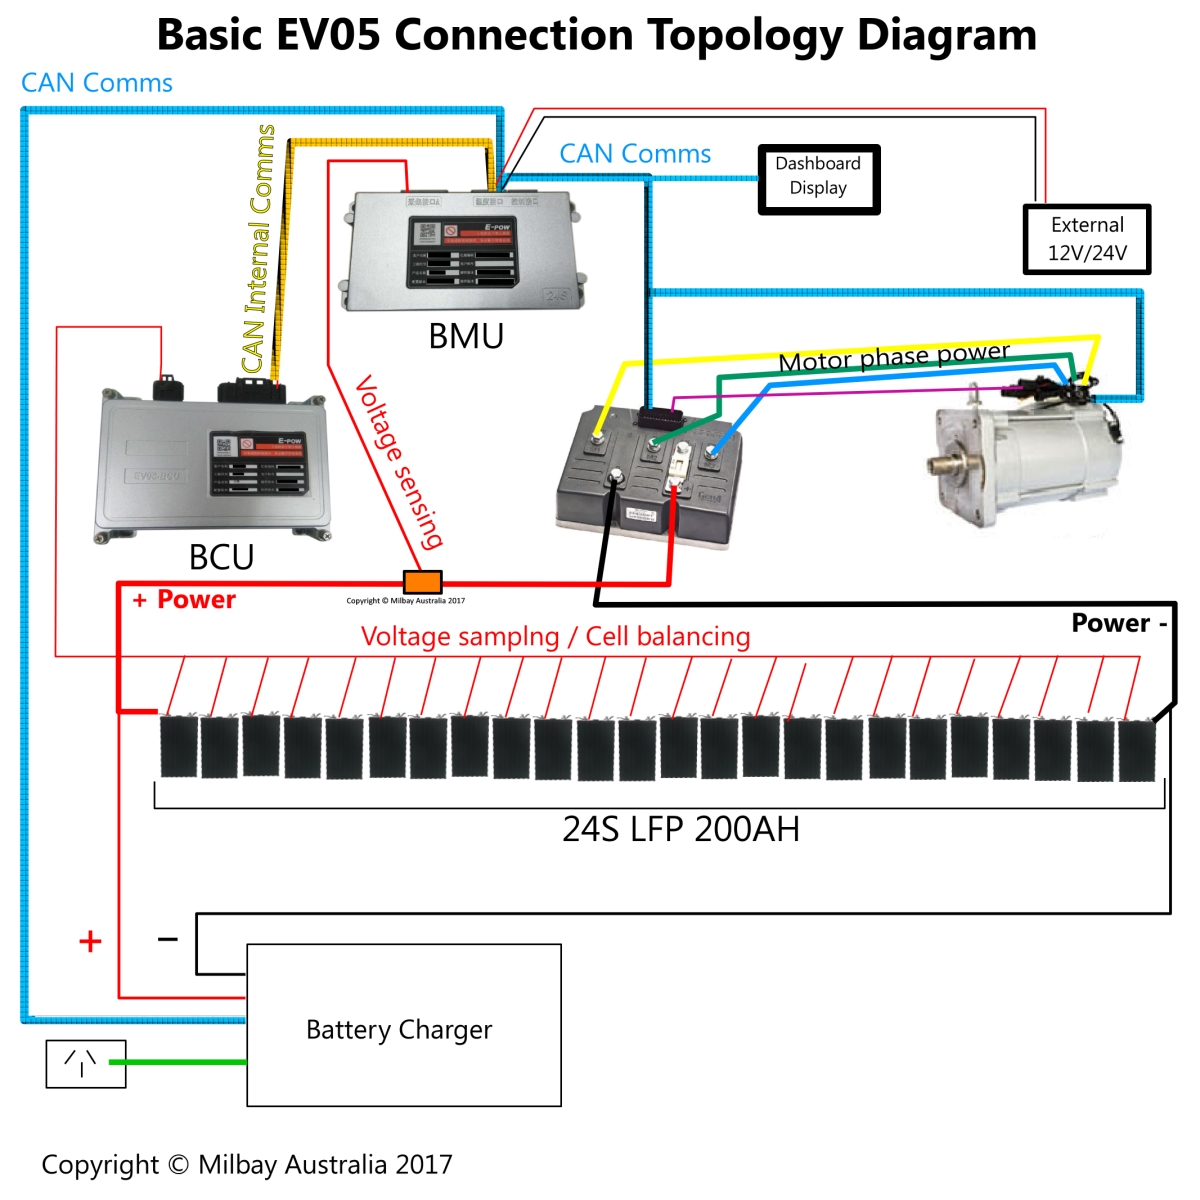 EV05 basic connection topology